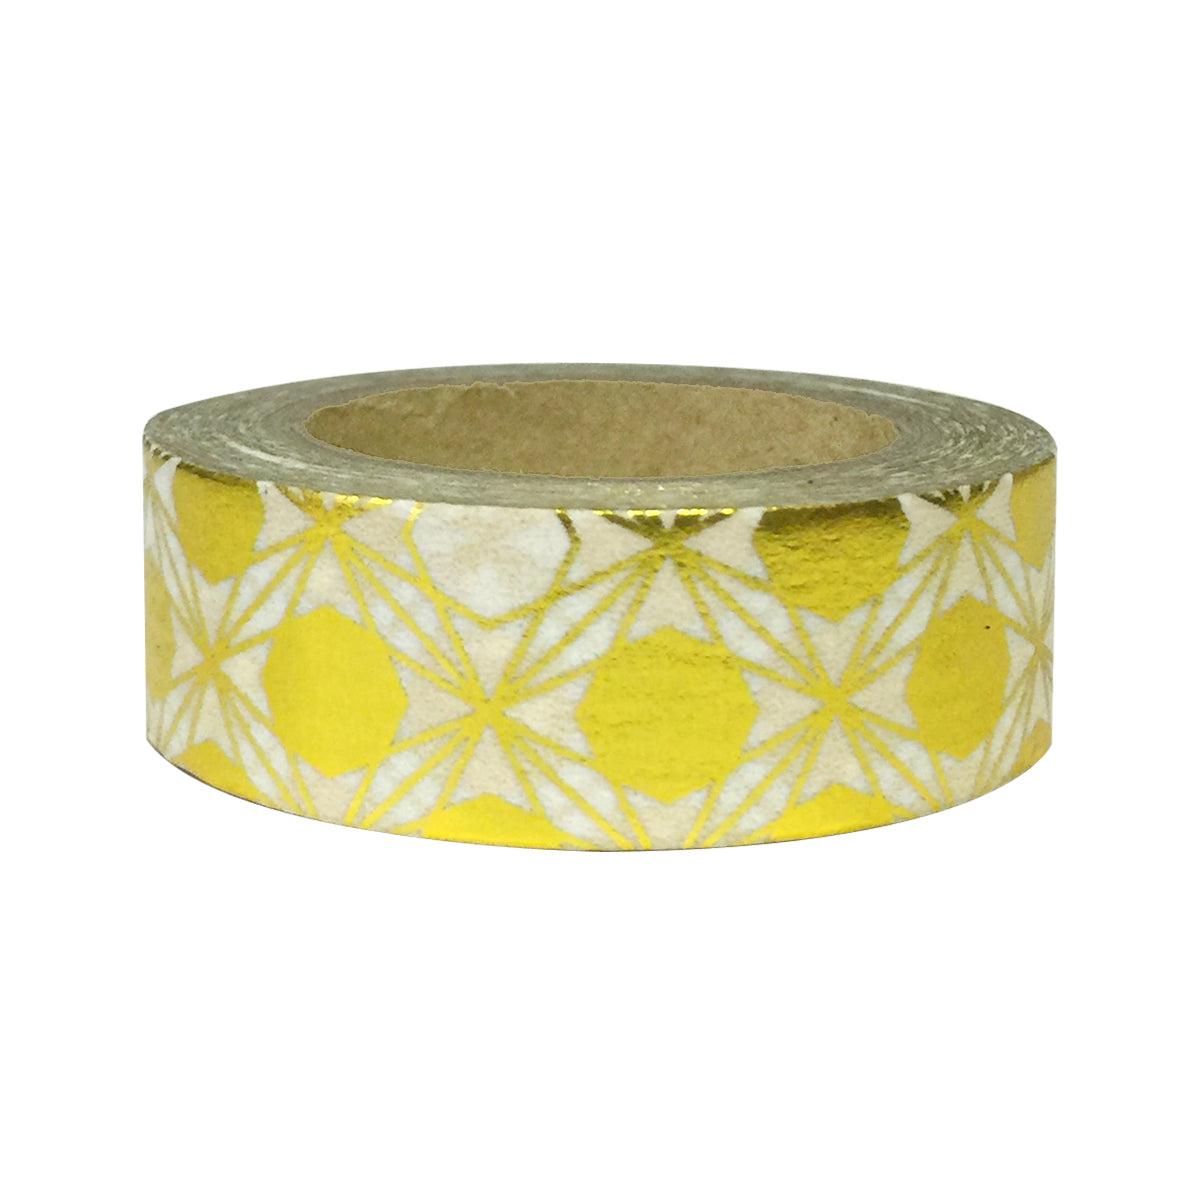 Wrapables Washi Masking Tape, Pastel and Gold Group